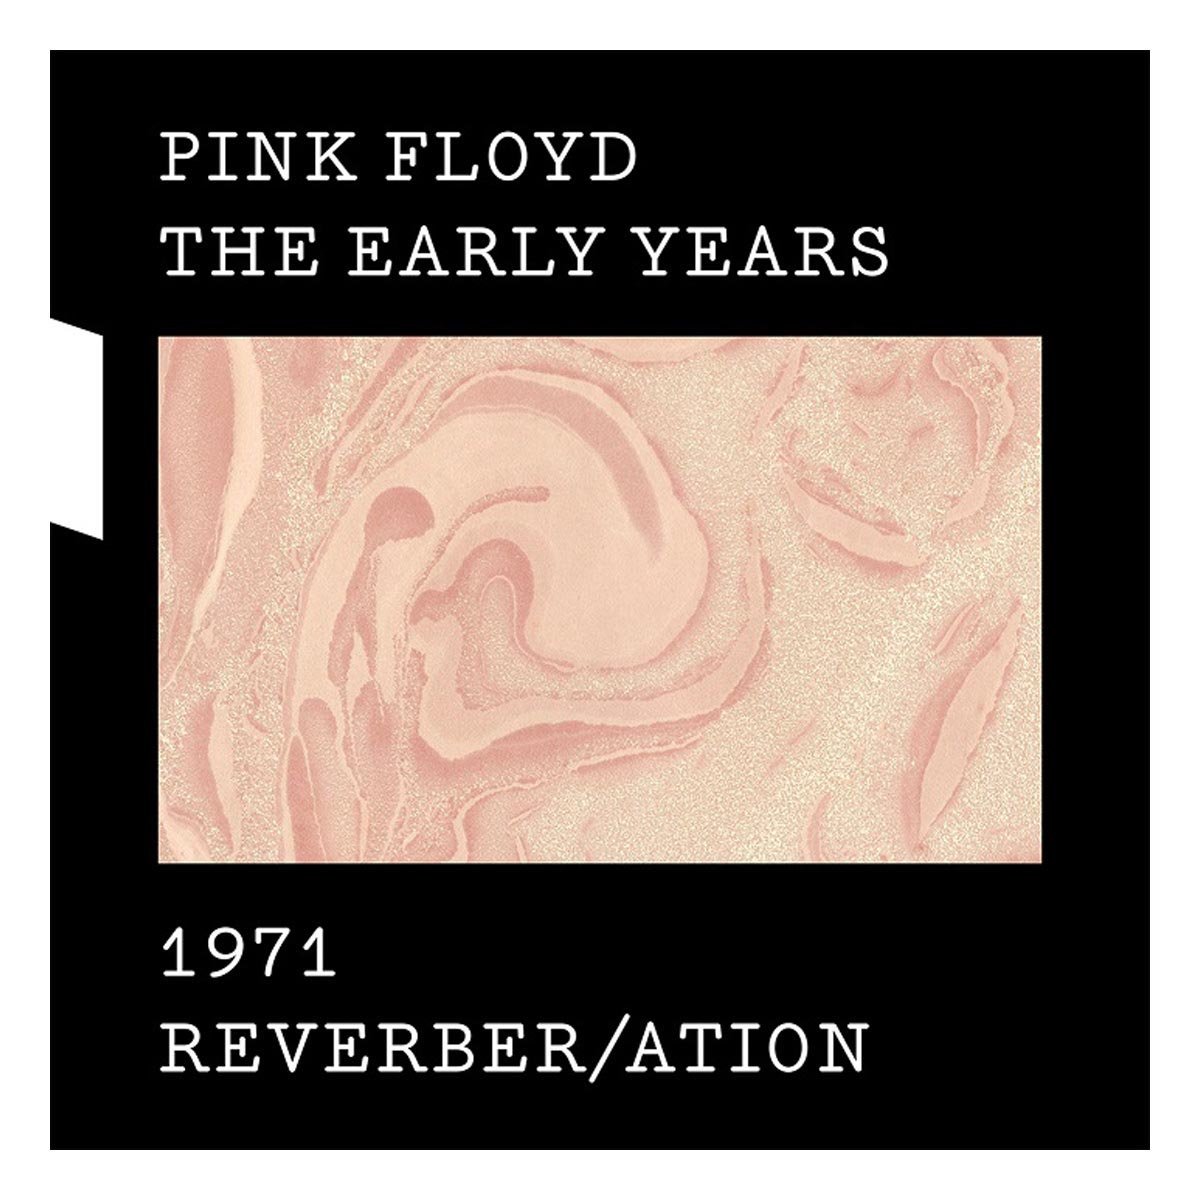 Cd Pink Floyd 1971 Reverberation